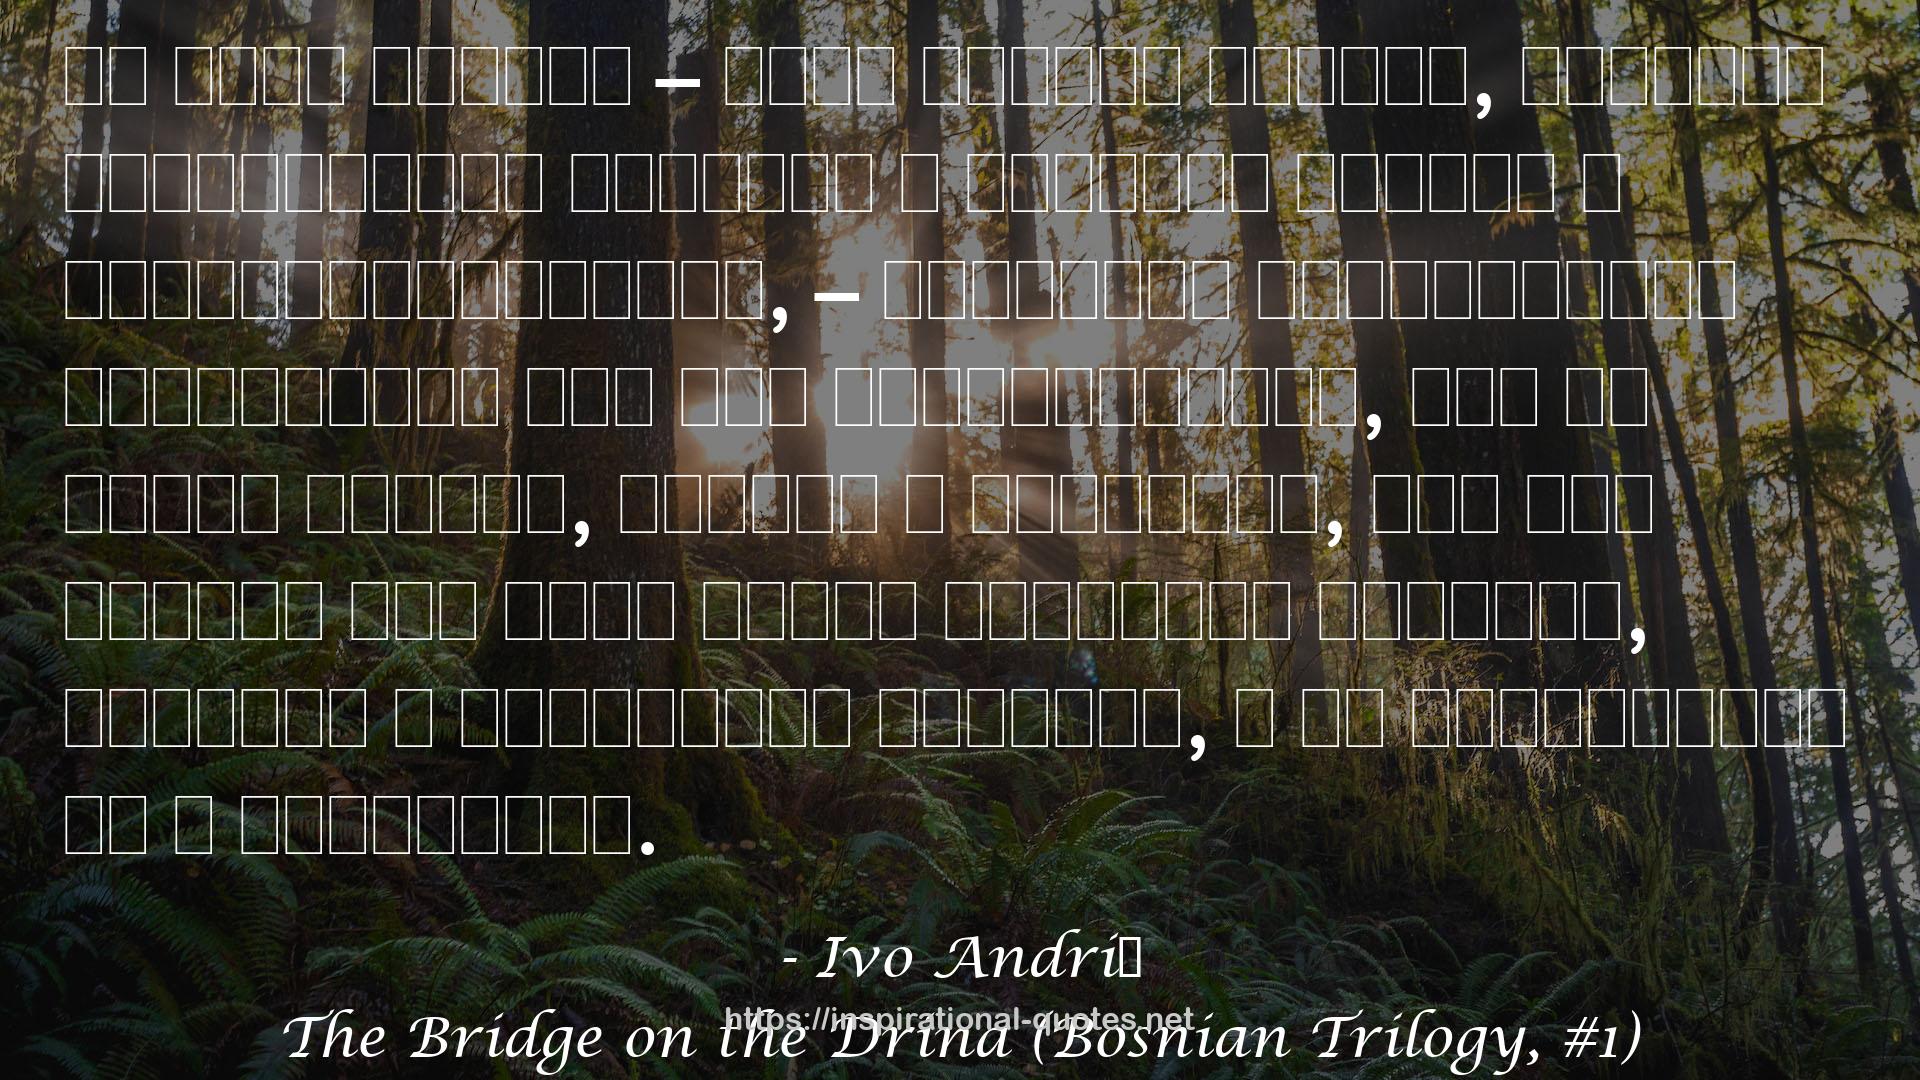 The Bridge on the Drina (Bosnian Trilogy, #1) QUOTES